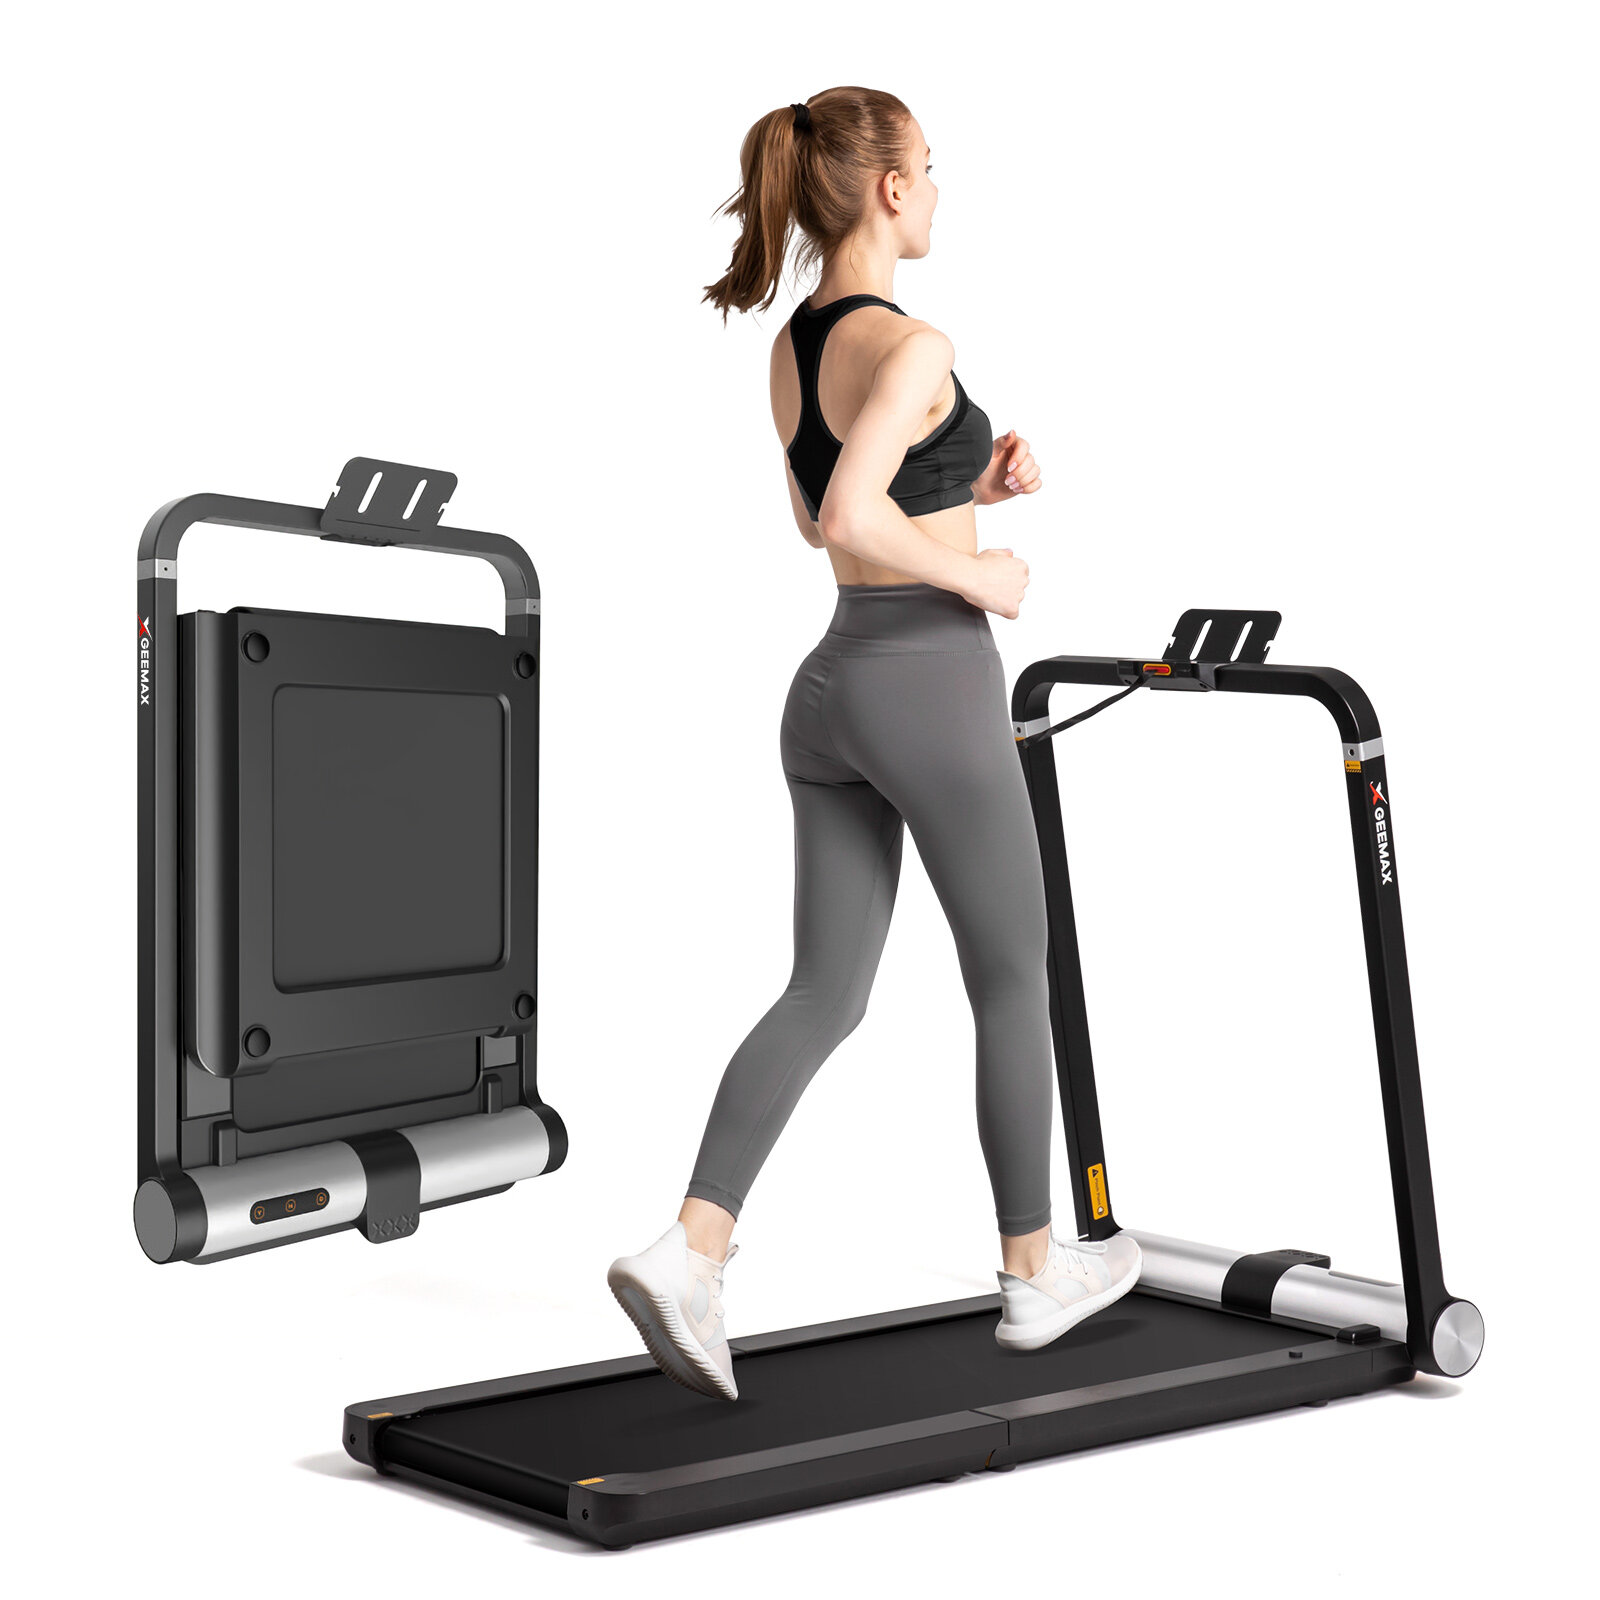 Geemax F1 Desk Treadmill Manual/Automatic Modes Folding Walking Pad Non-slip Smart LCD Display 10Km/H Running Fitness Equipment